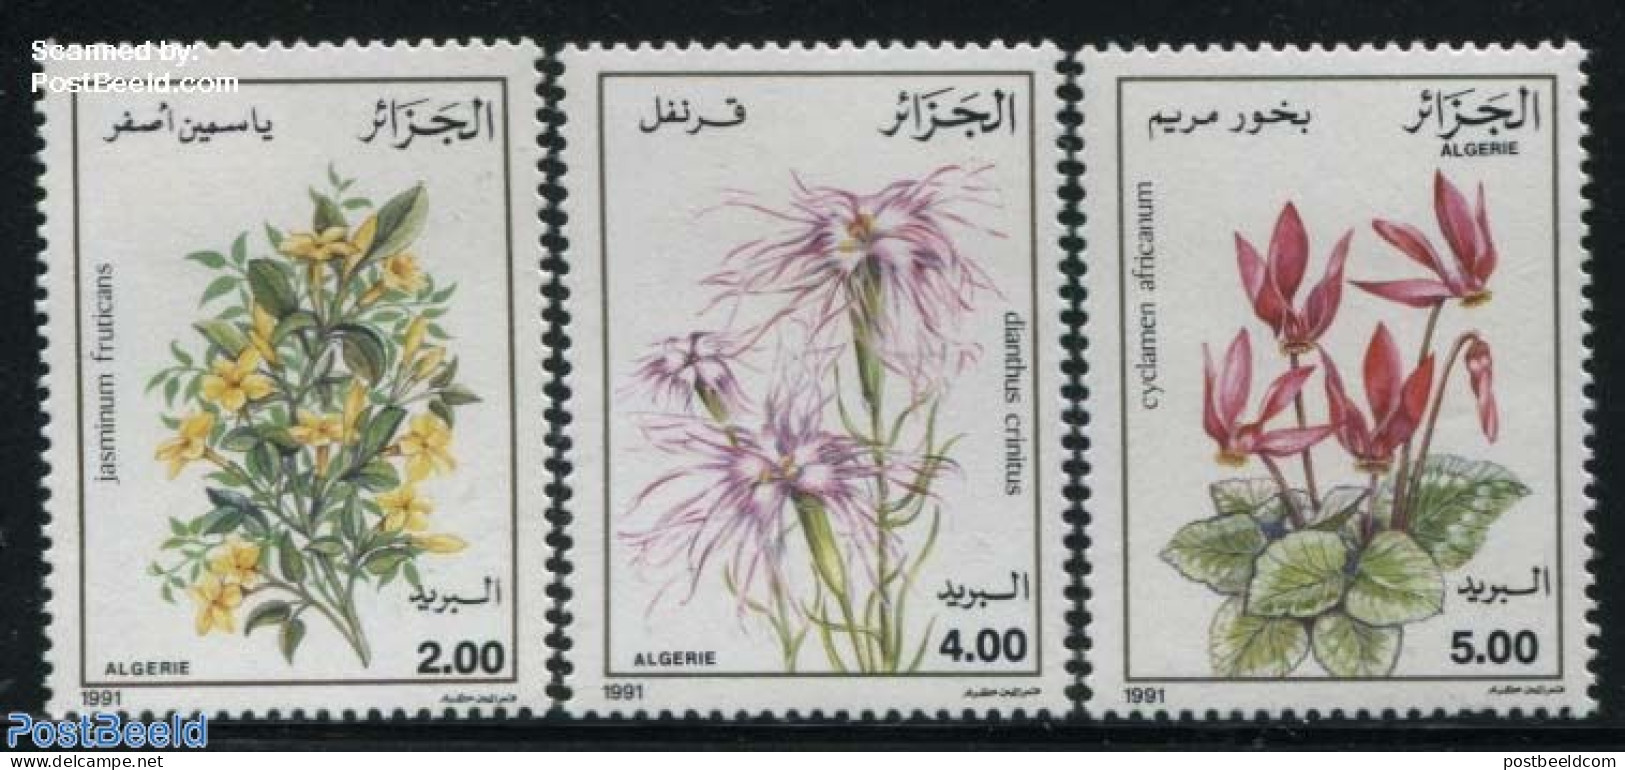 Algeria 1991 Flowers 3v, Mint NH, Nature - Flowers & Plants - Unused Stamps